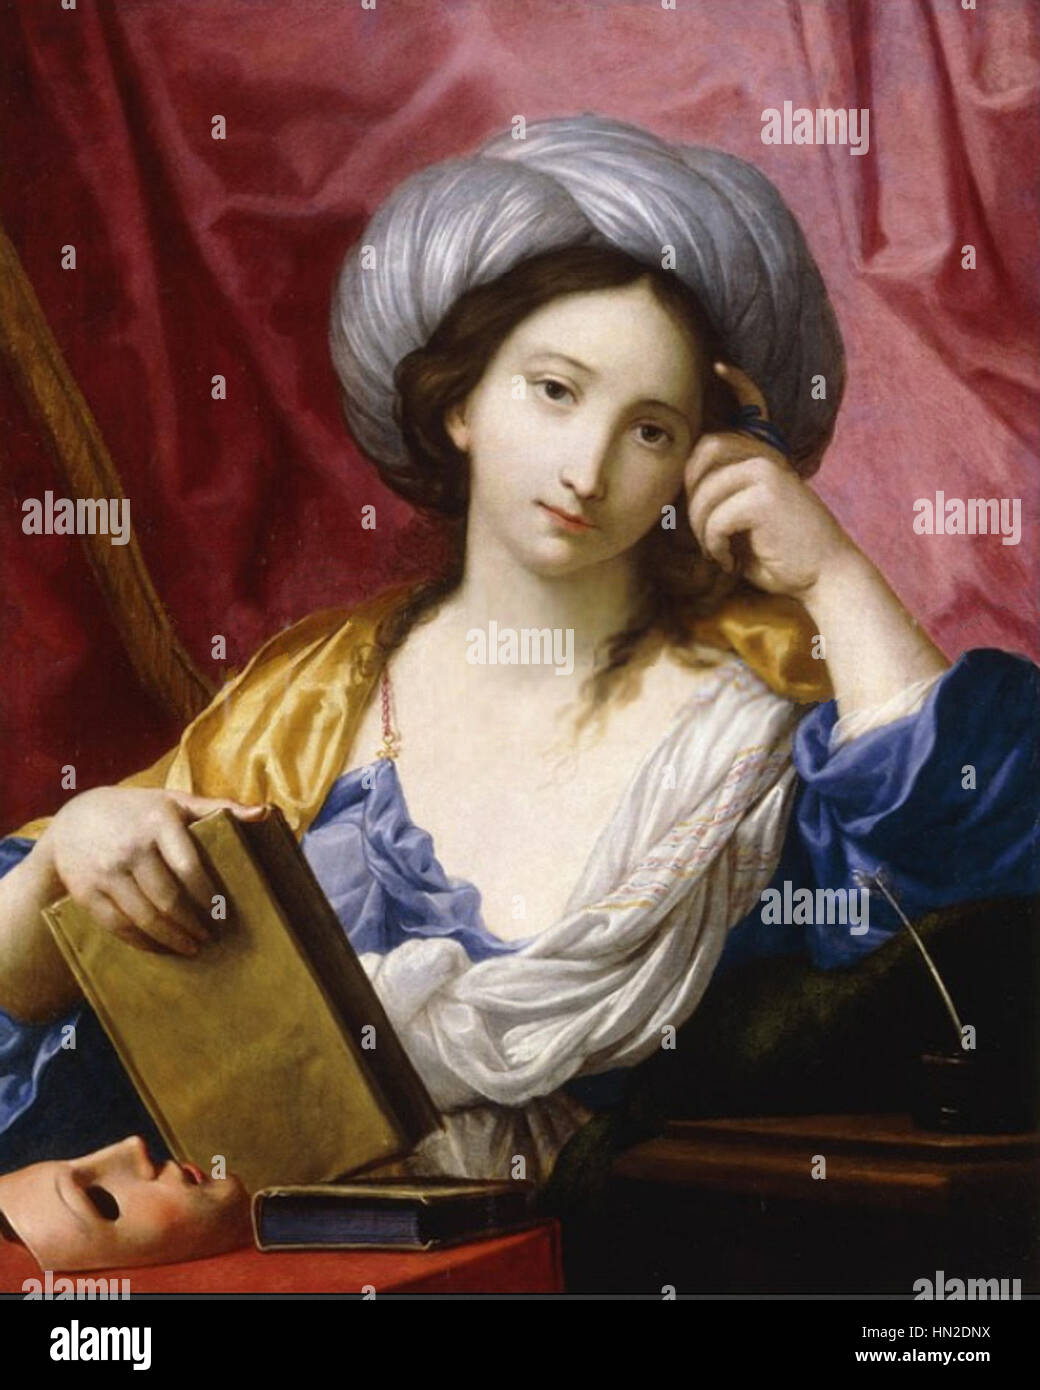 Melpomene, The Muse of Tragedy by Elisabetta Sirani Stock Photo